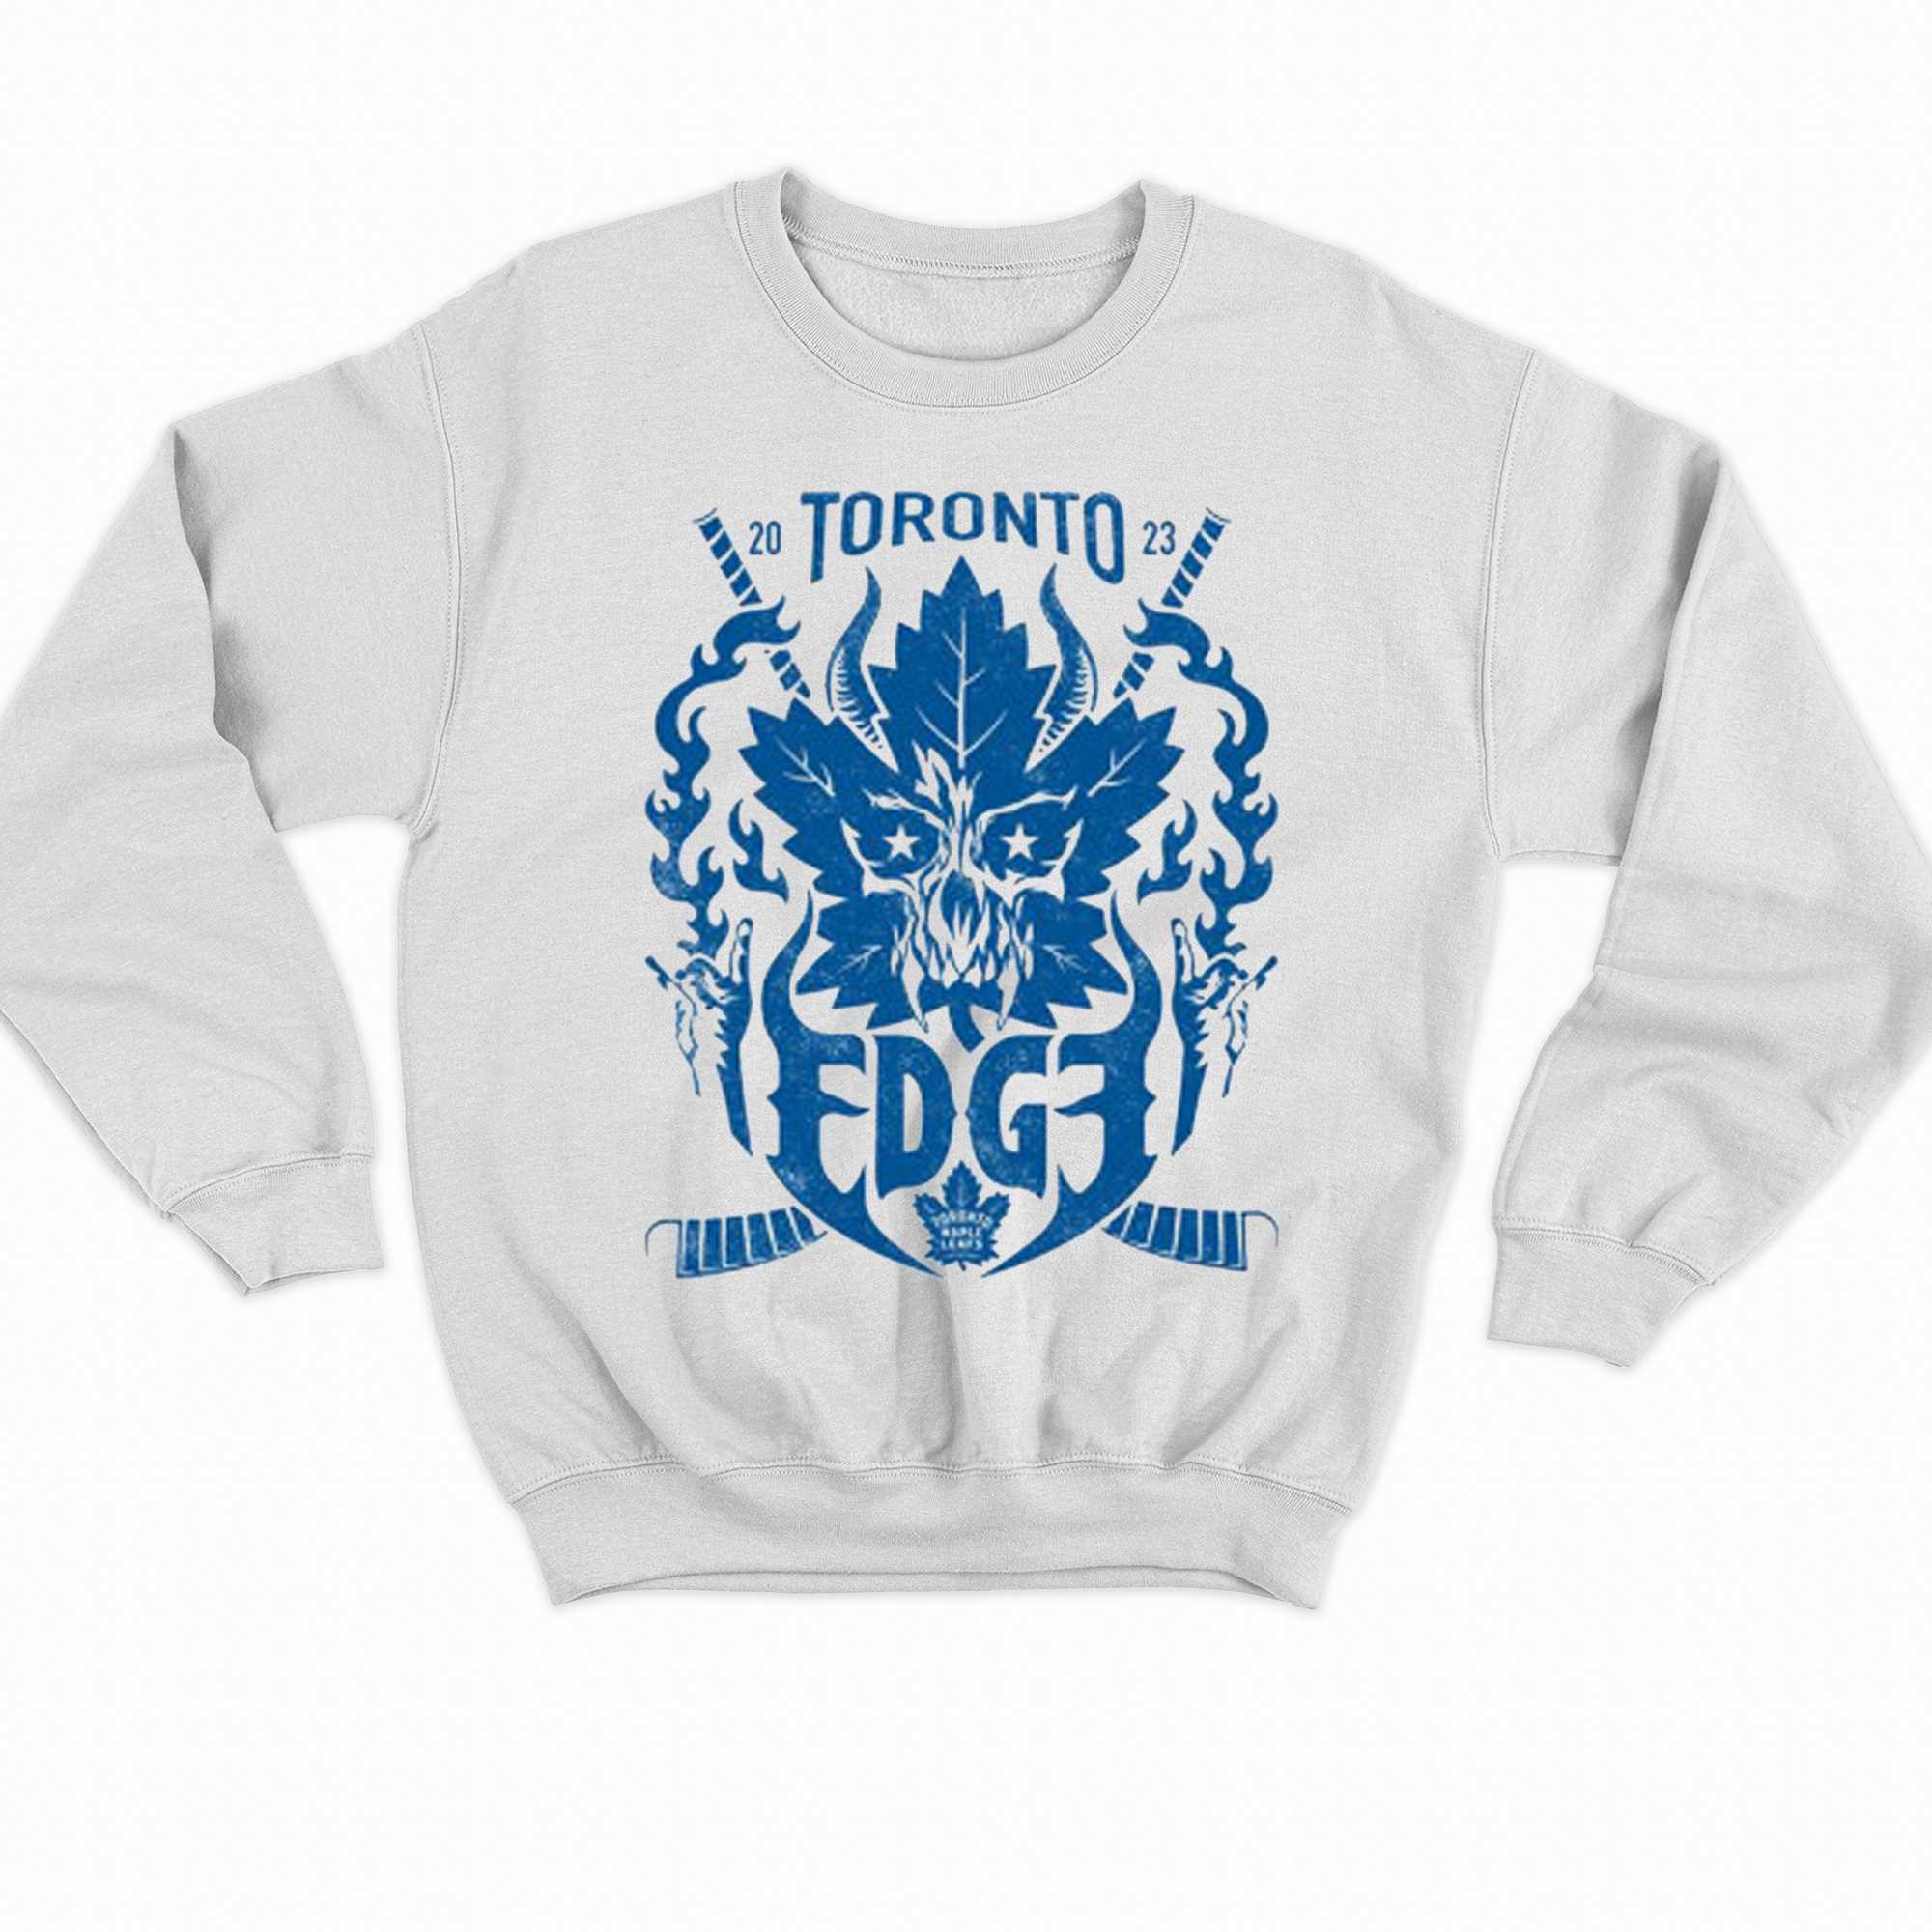 Official go Leafs go Toronto Maple leafs shirt, hoodie, longsleeve